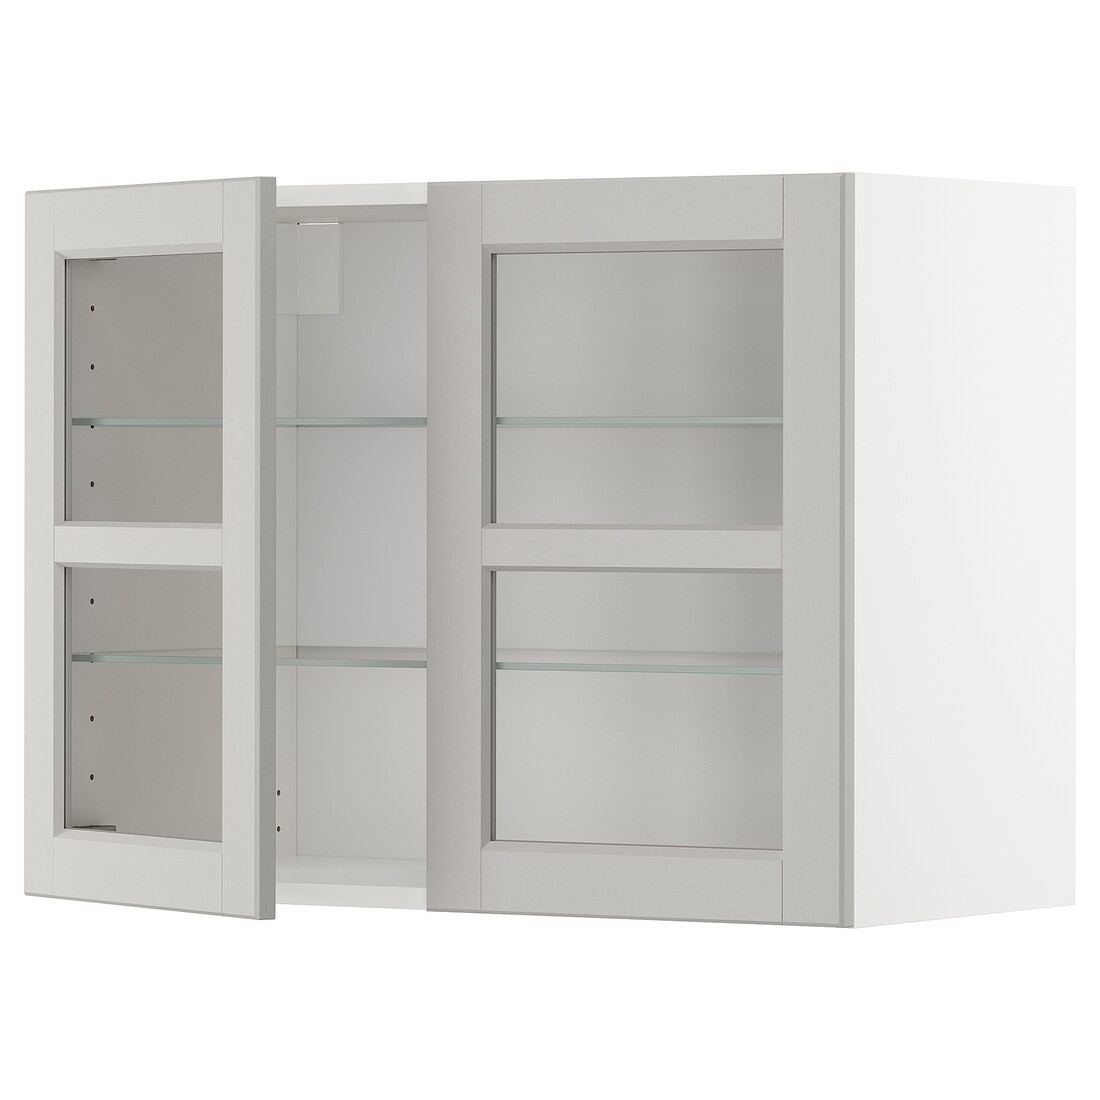 METOD МЕТОД Навесной шкаф, белый / Lerhyttan светло-серый, 80x60 см